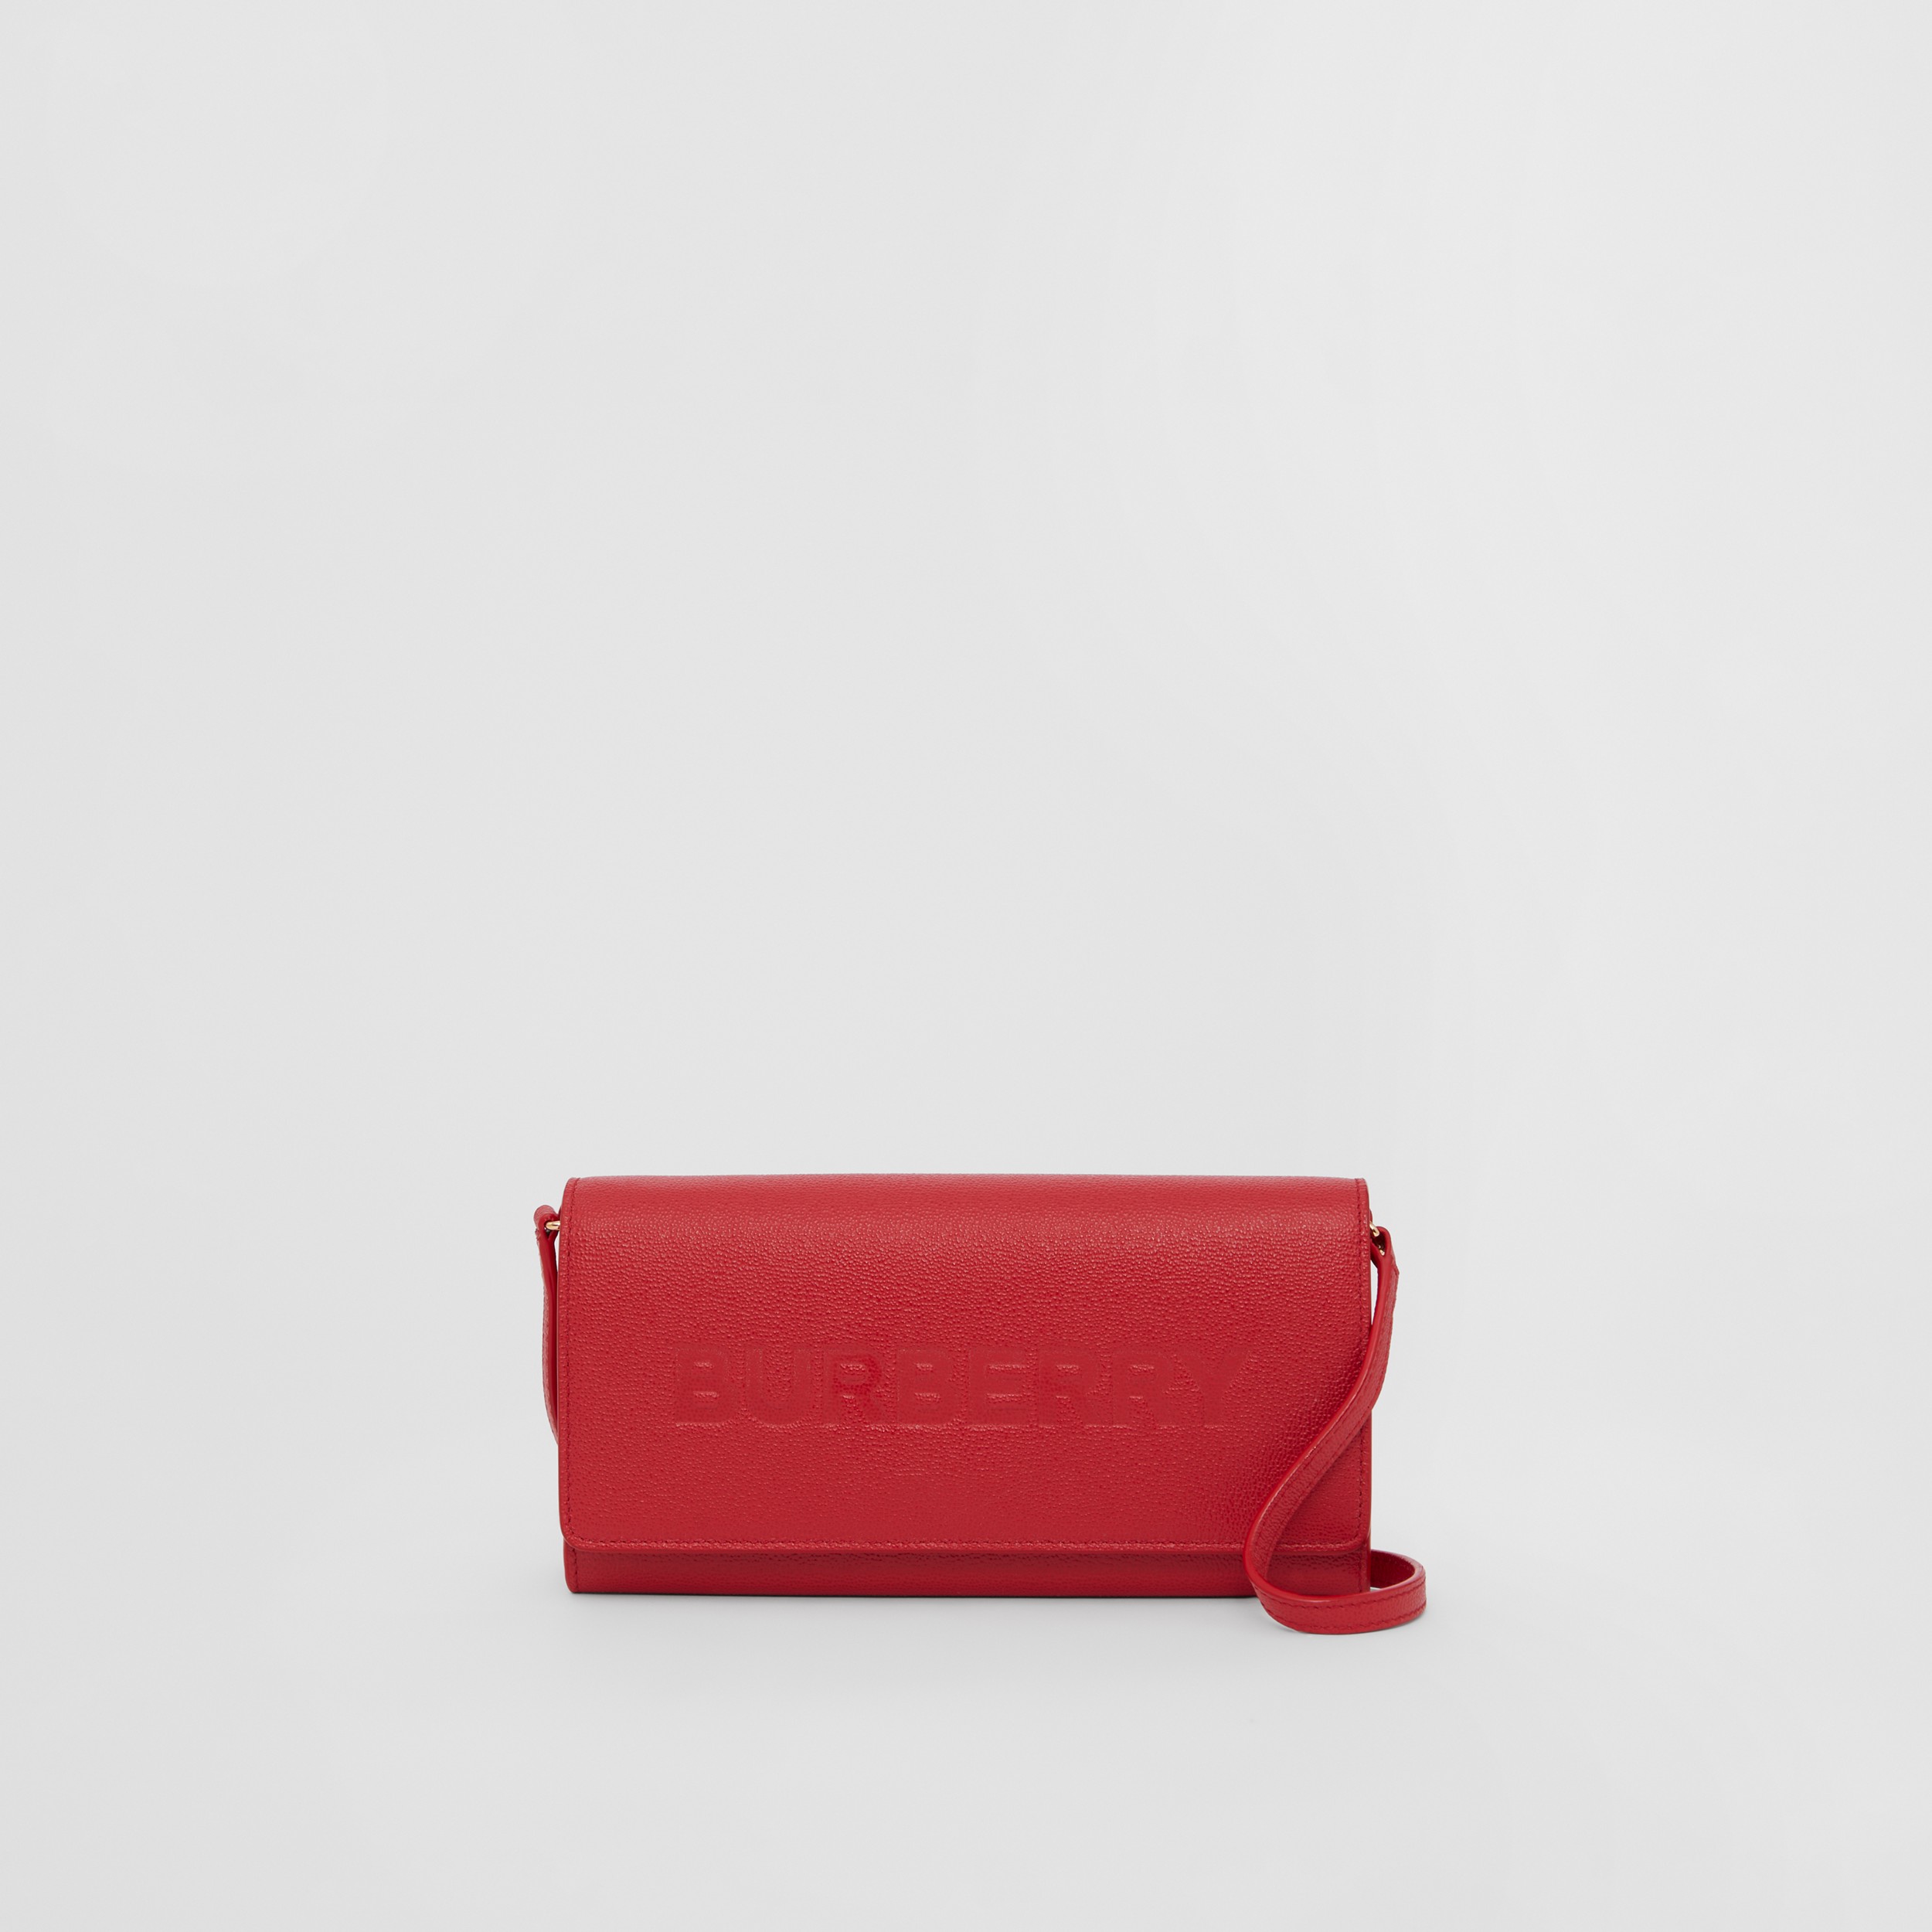 Lederbrieftasche mit Riemen und geprägtem Burberry-Schriftzug (Rot) - Damen | Burberry® - 1